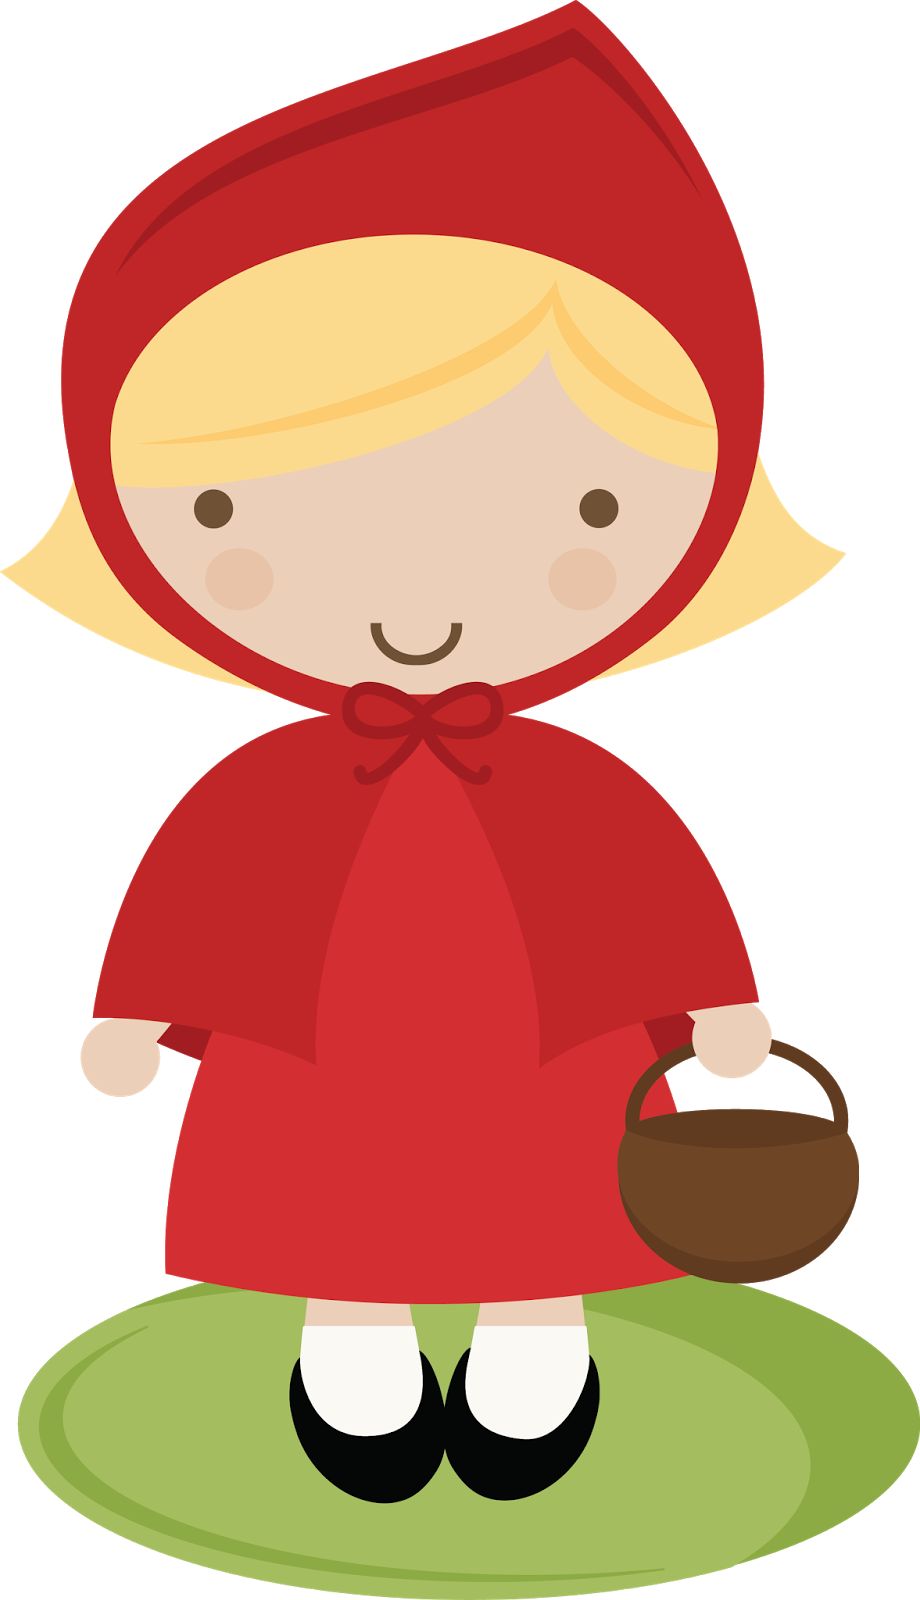 Little Red Riding Hood Template   Clipart Best